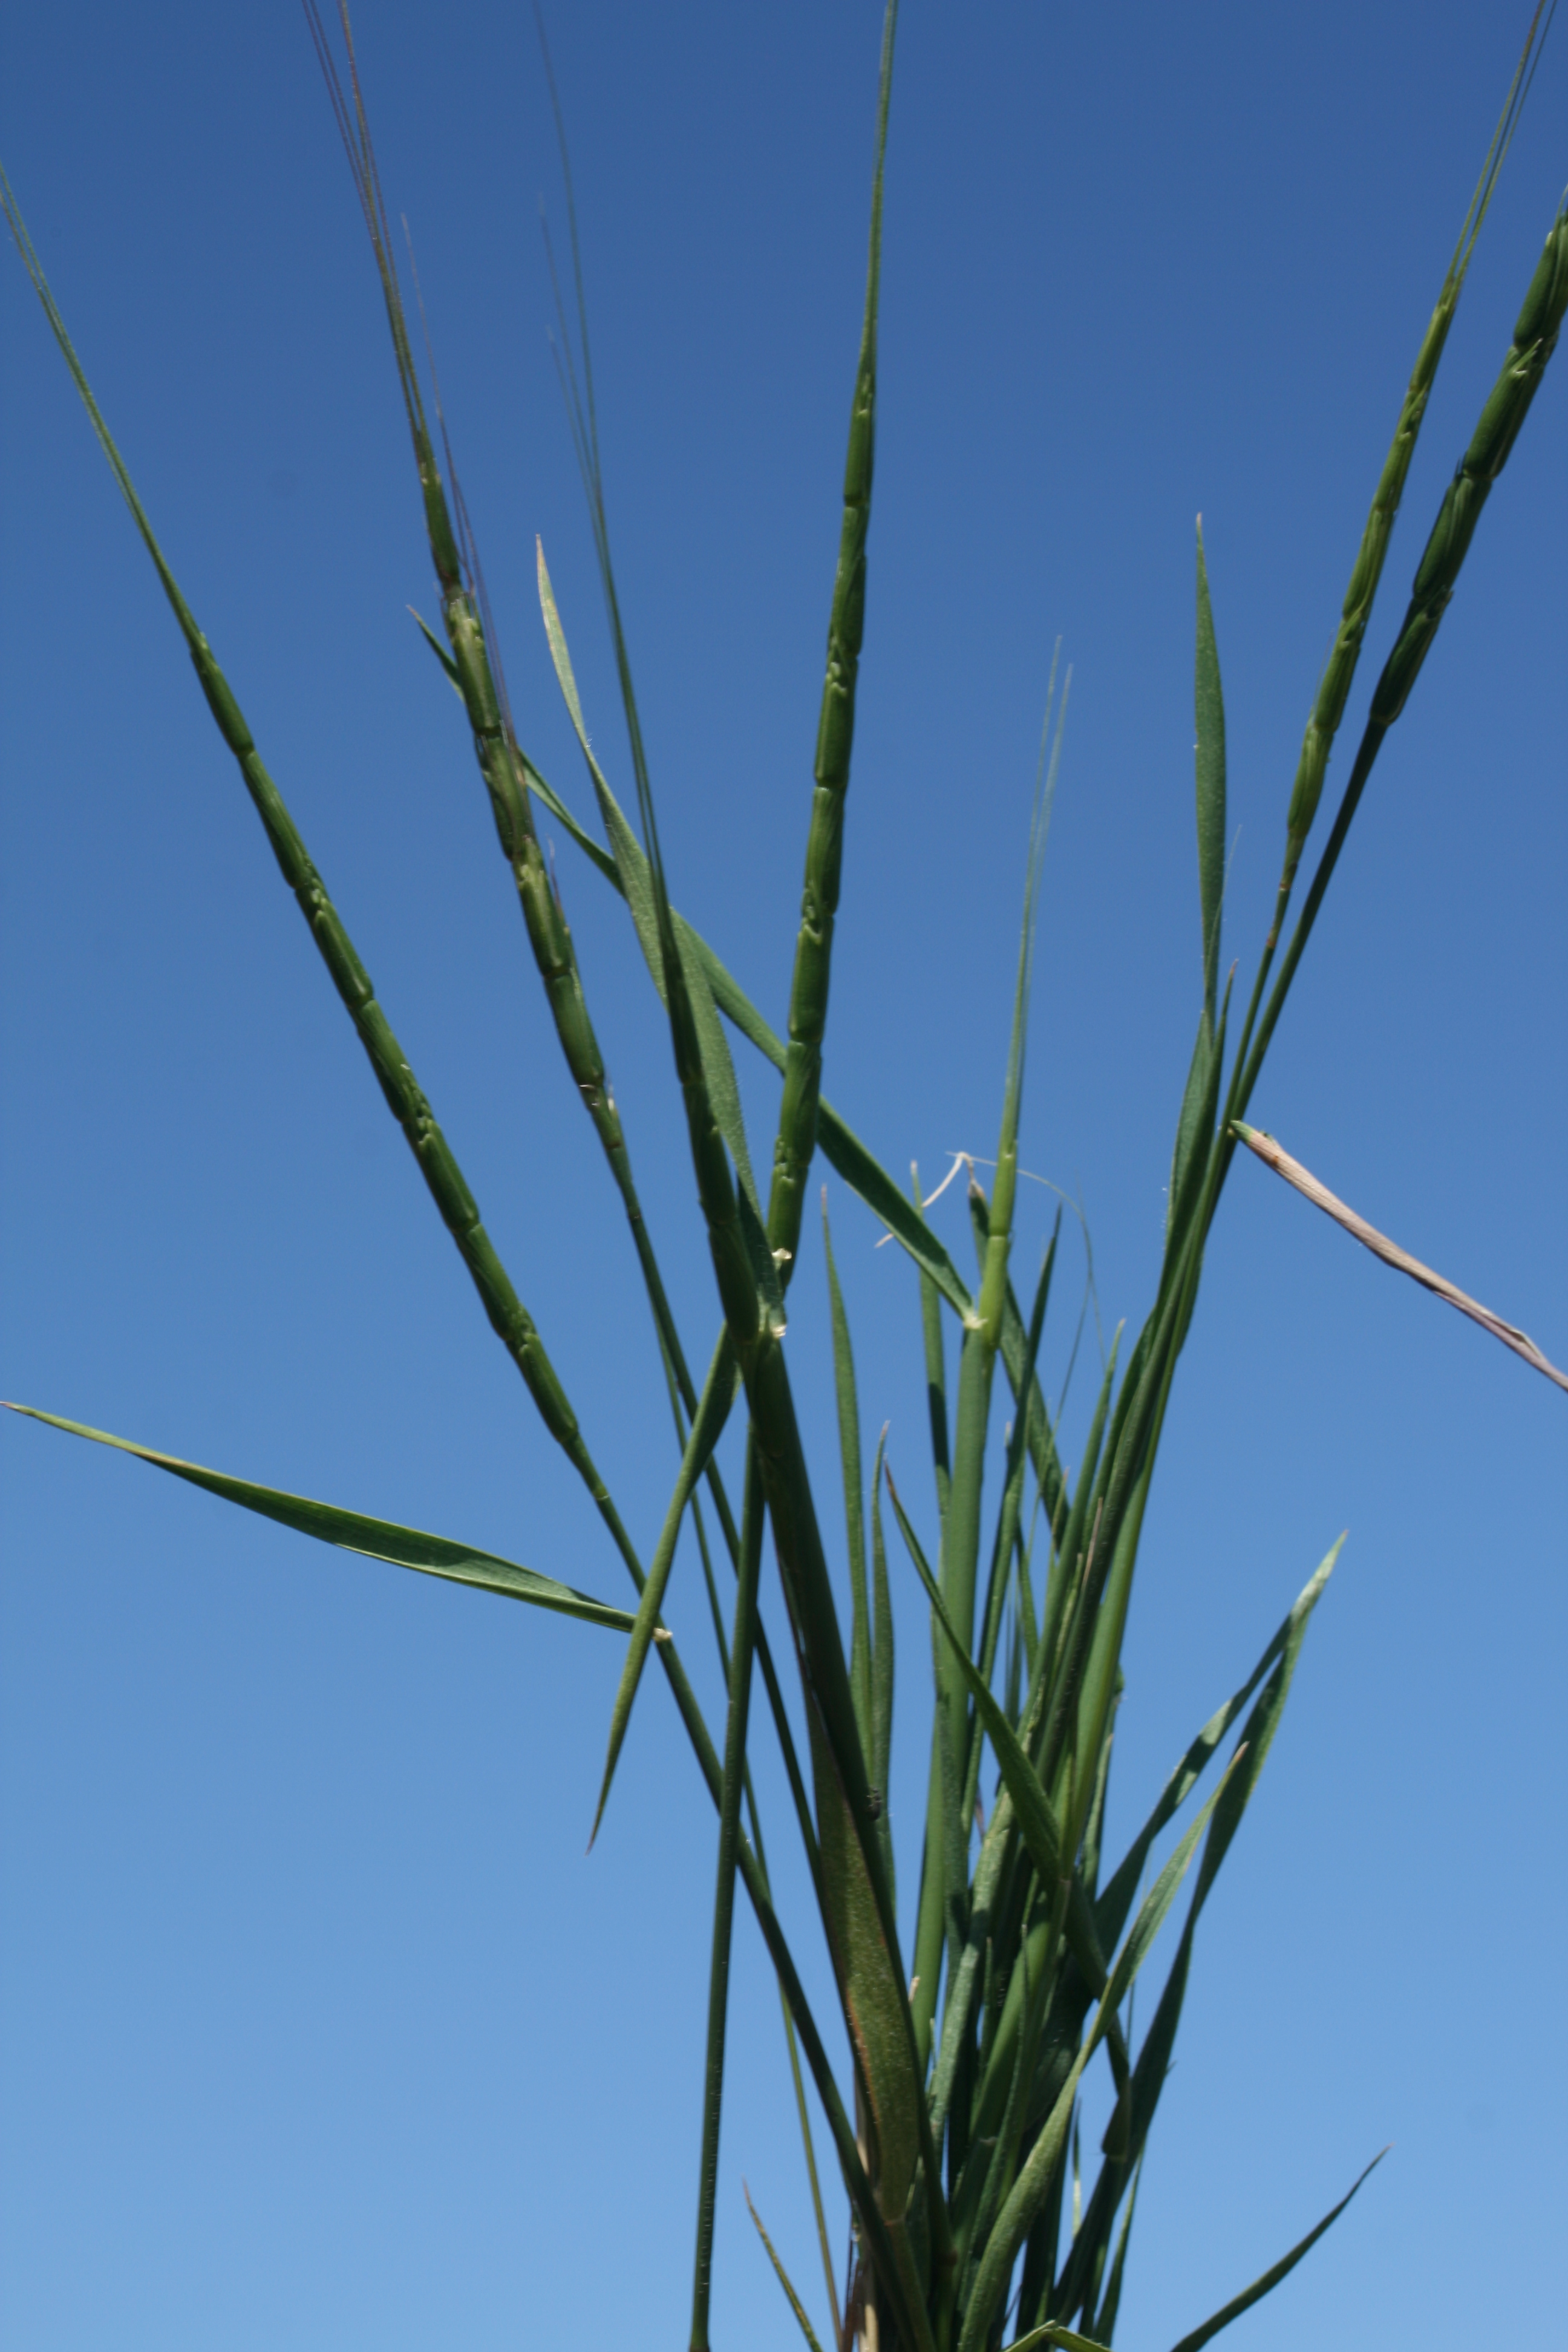 Jointed Goatgrass (Aegilops cylindrica)
